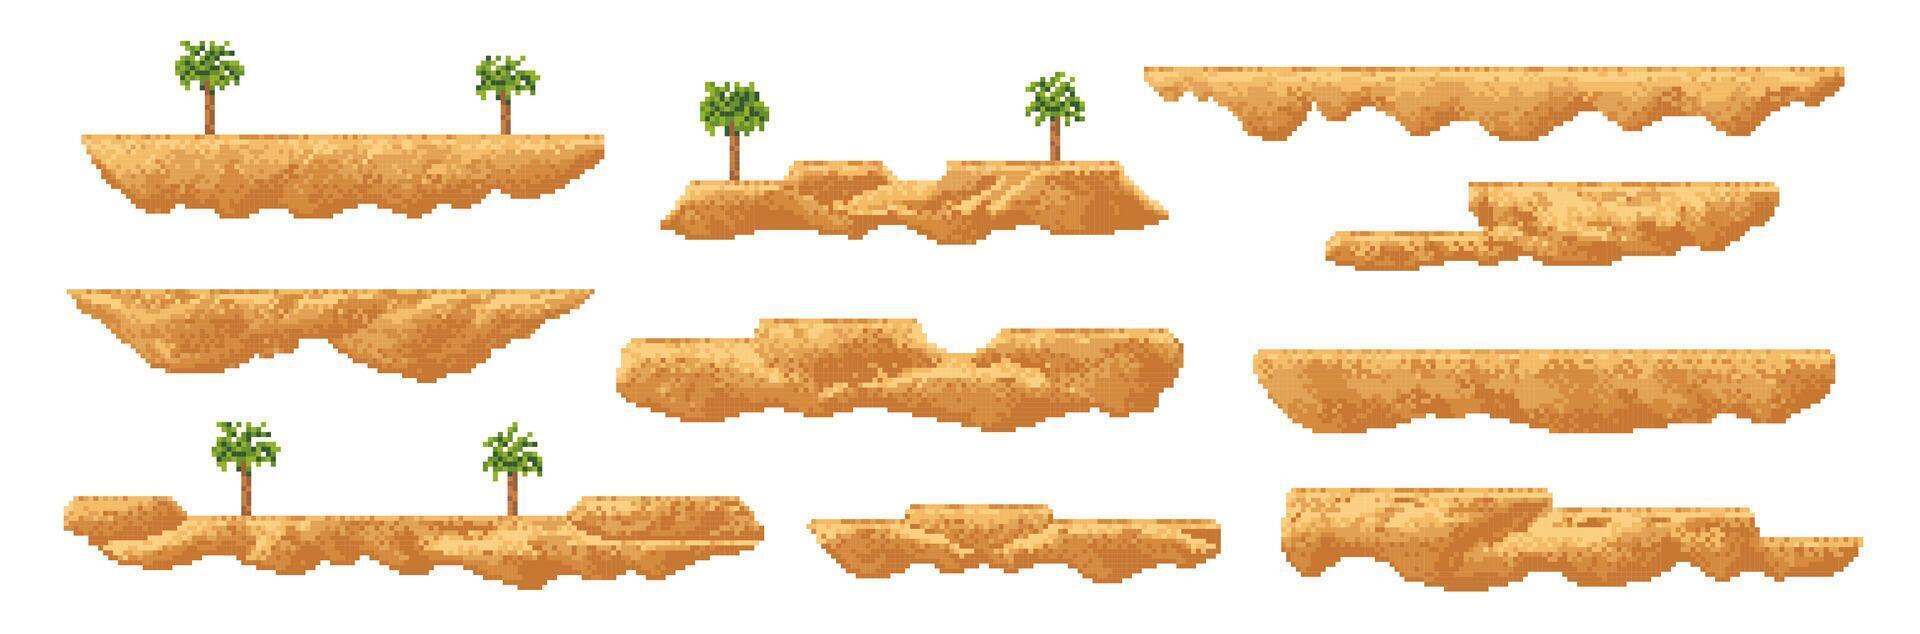 8 bit arcade pixel art game palm, sand platforms vector